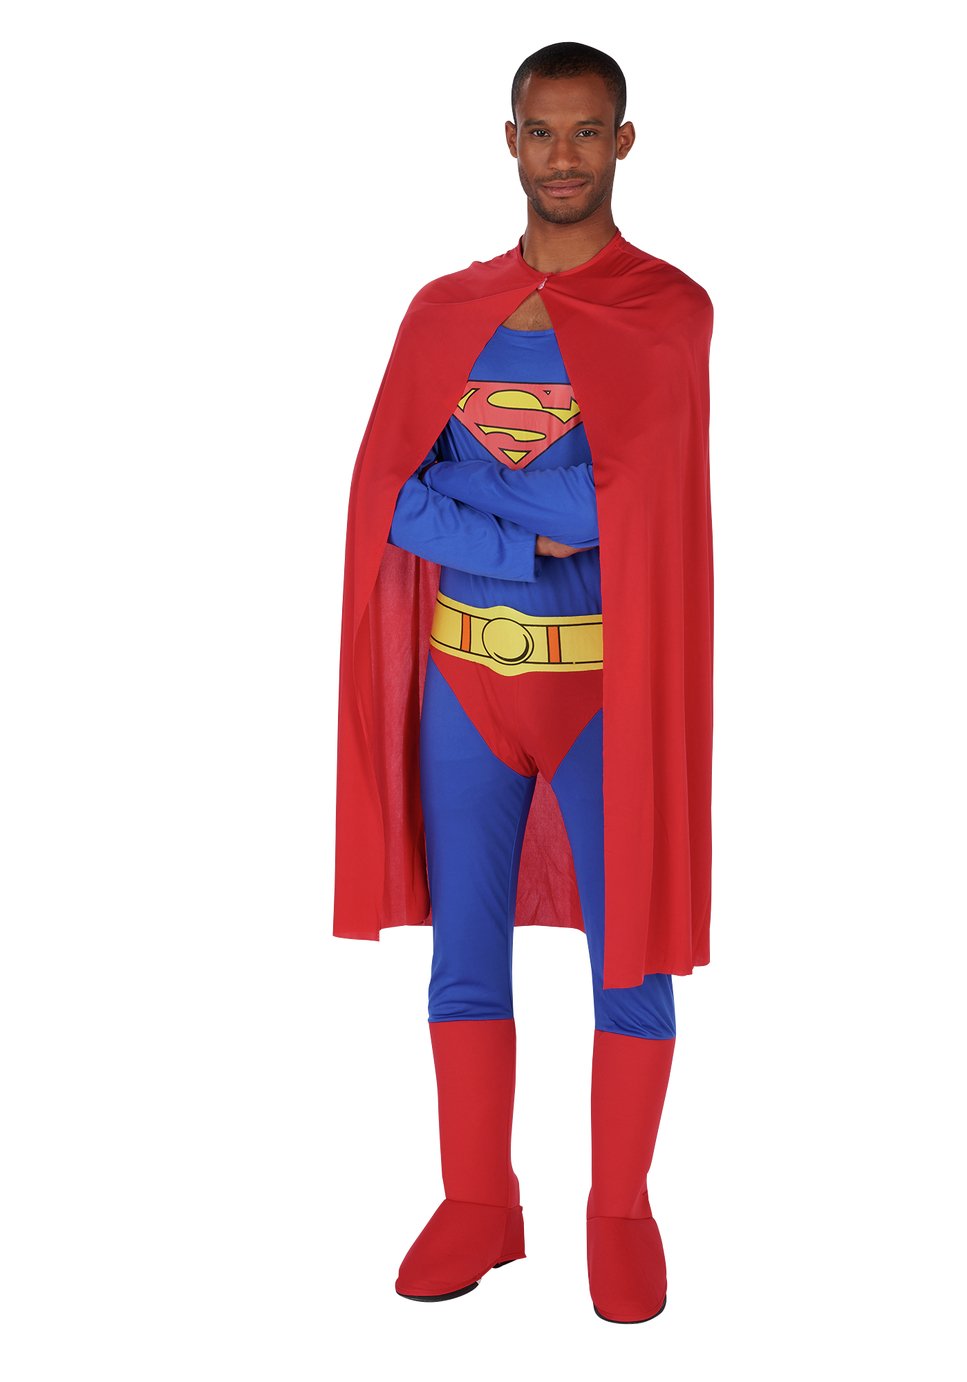 DC Superman Fancy Dress Costume - Small/Medium